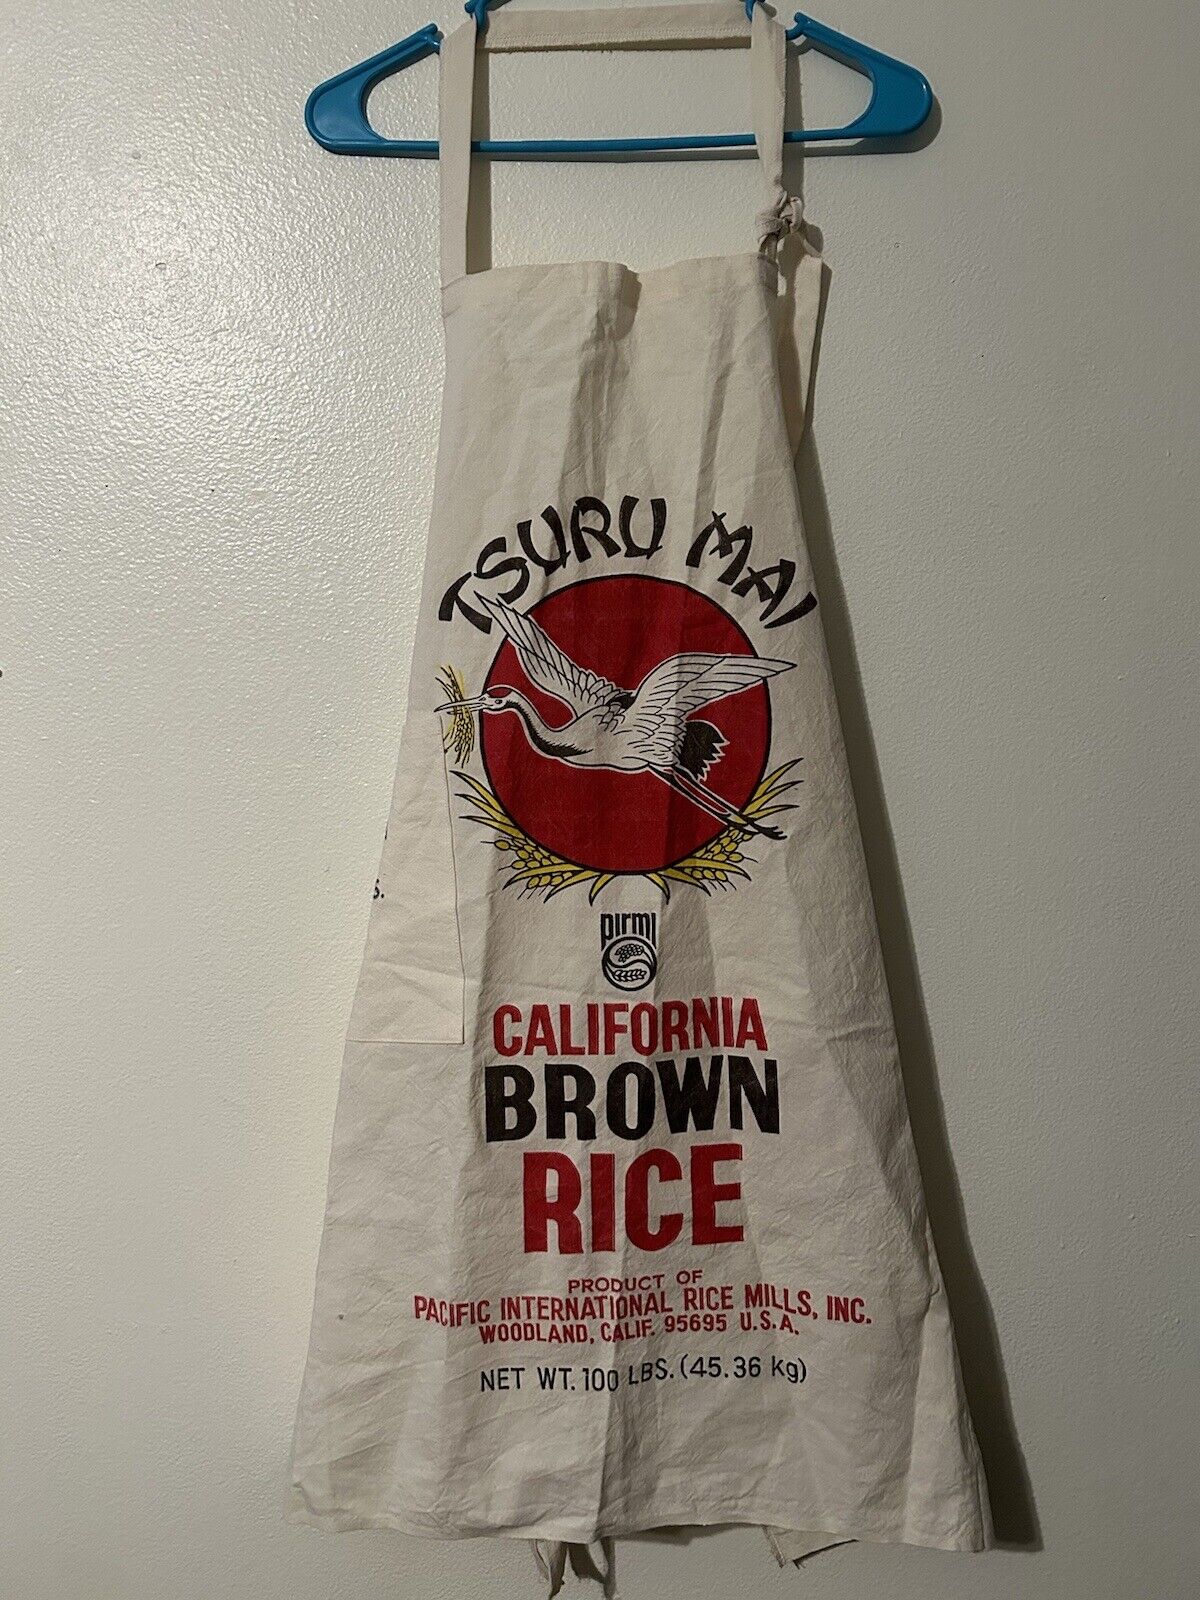 Vintage Rice Sack Apron TSURU MAI Crane Hawaii California Brown Rice